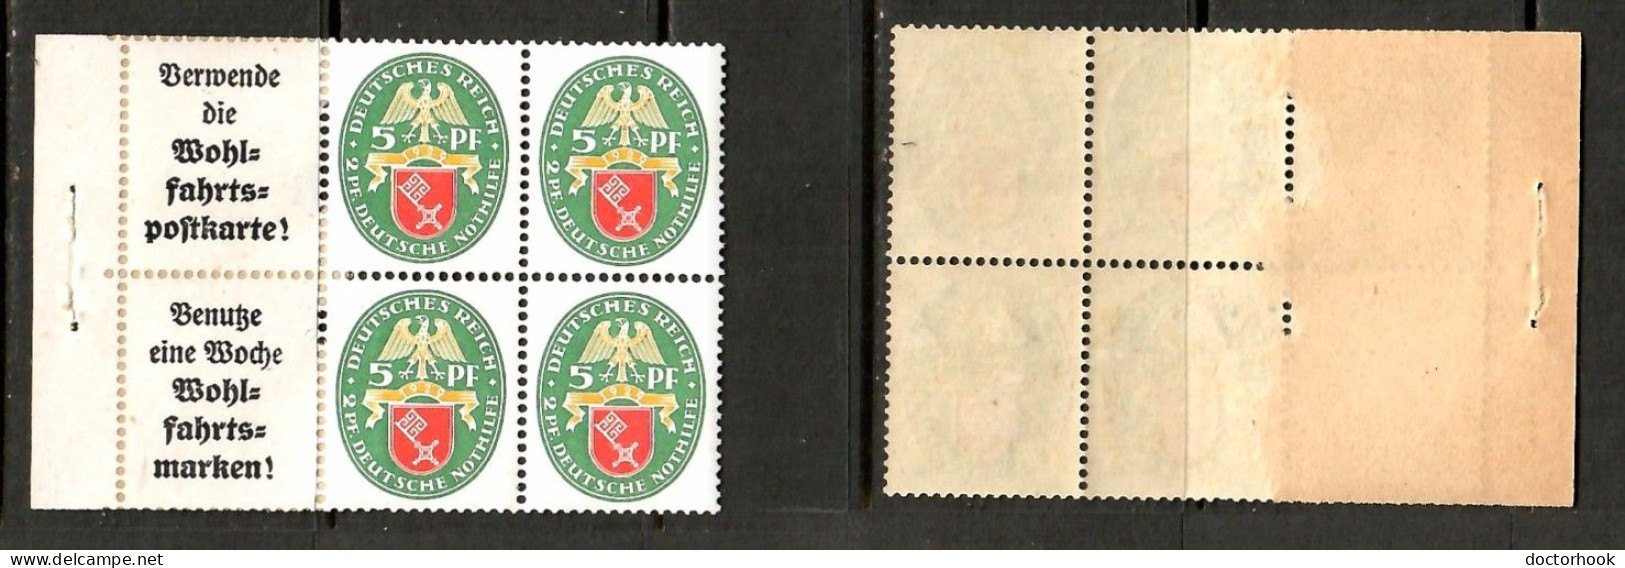 GERMANY   Scott # B 28* MINT OG BOOKLET PANE Of 4 + 2 LABELS (PAPER ADHESION)  (CONDITION AS PER SCAN) (LG-1764) - Postzegelboekjes & Se-tenant